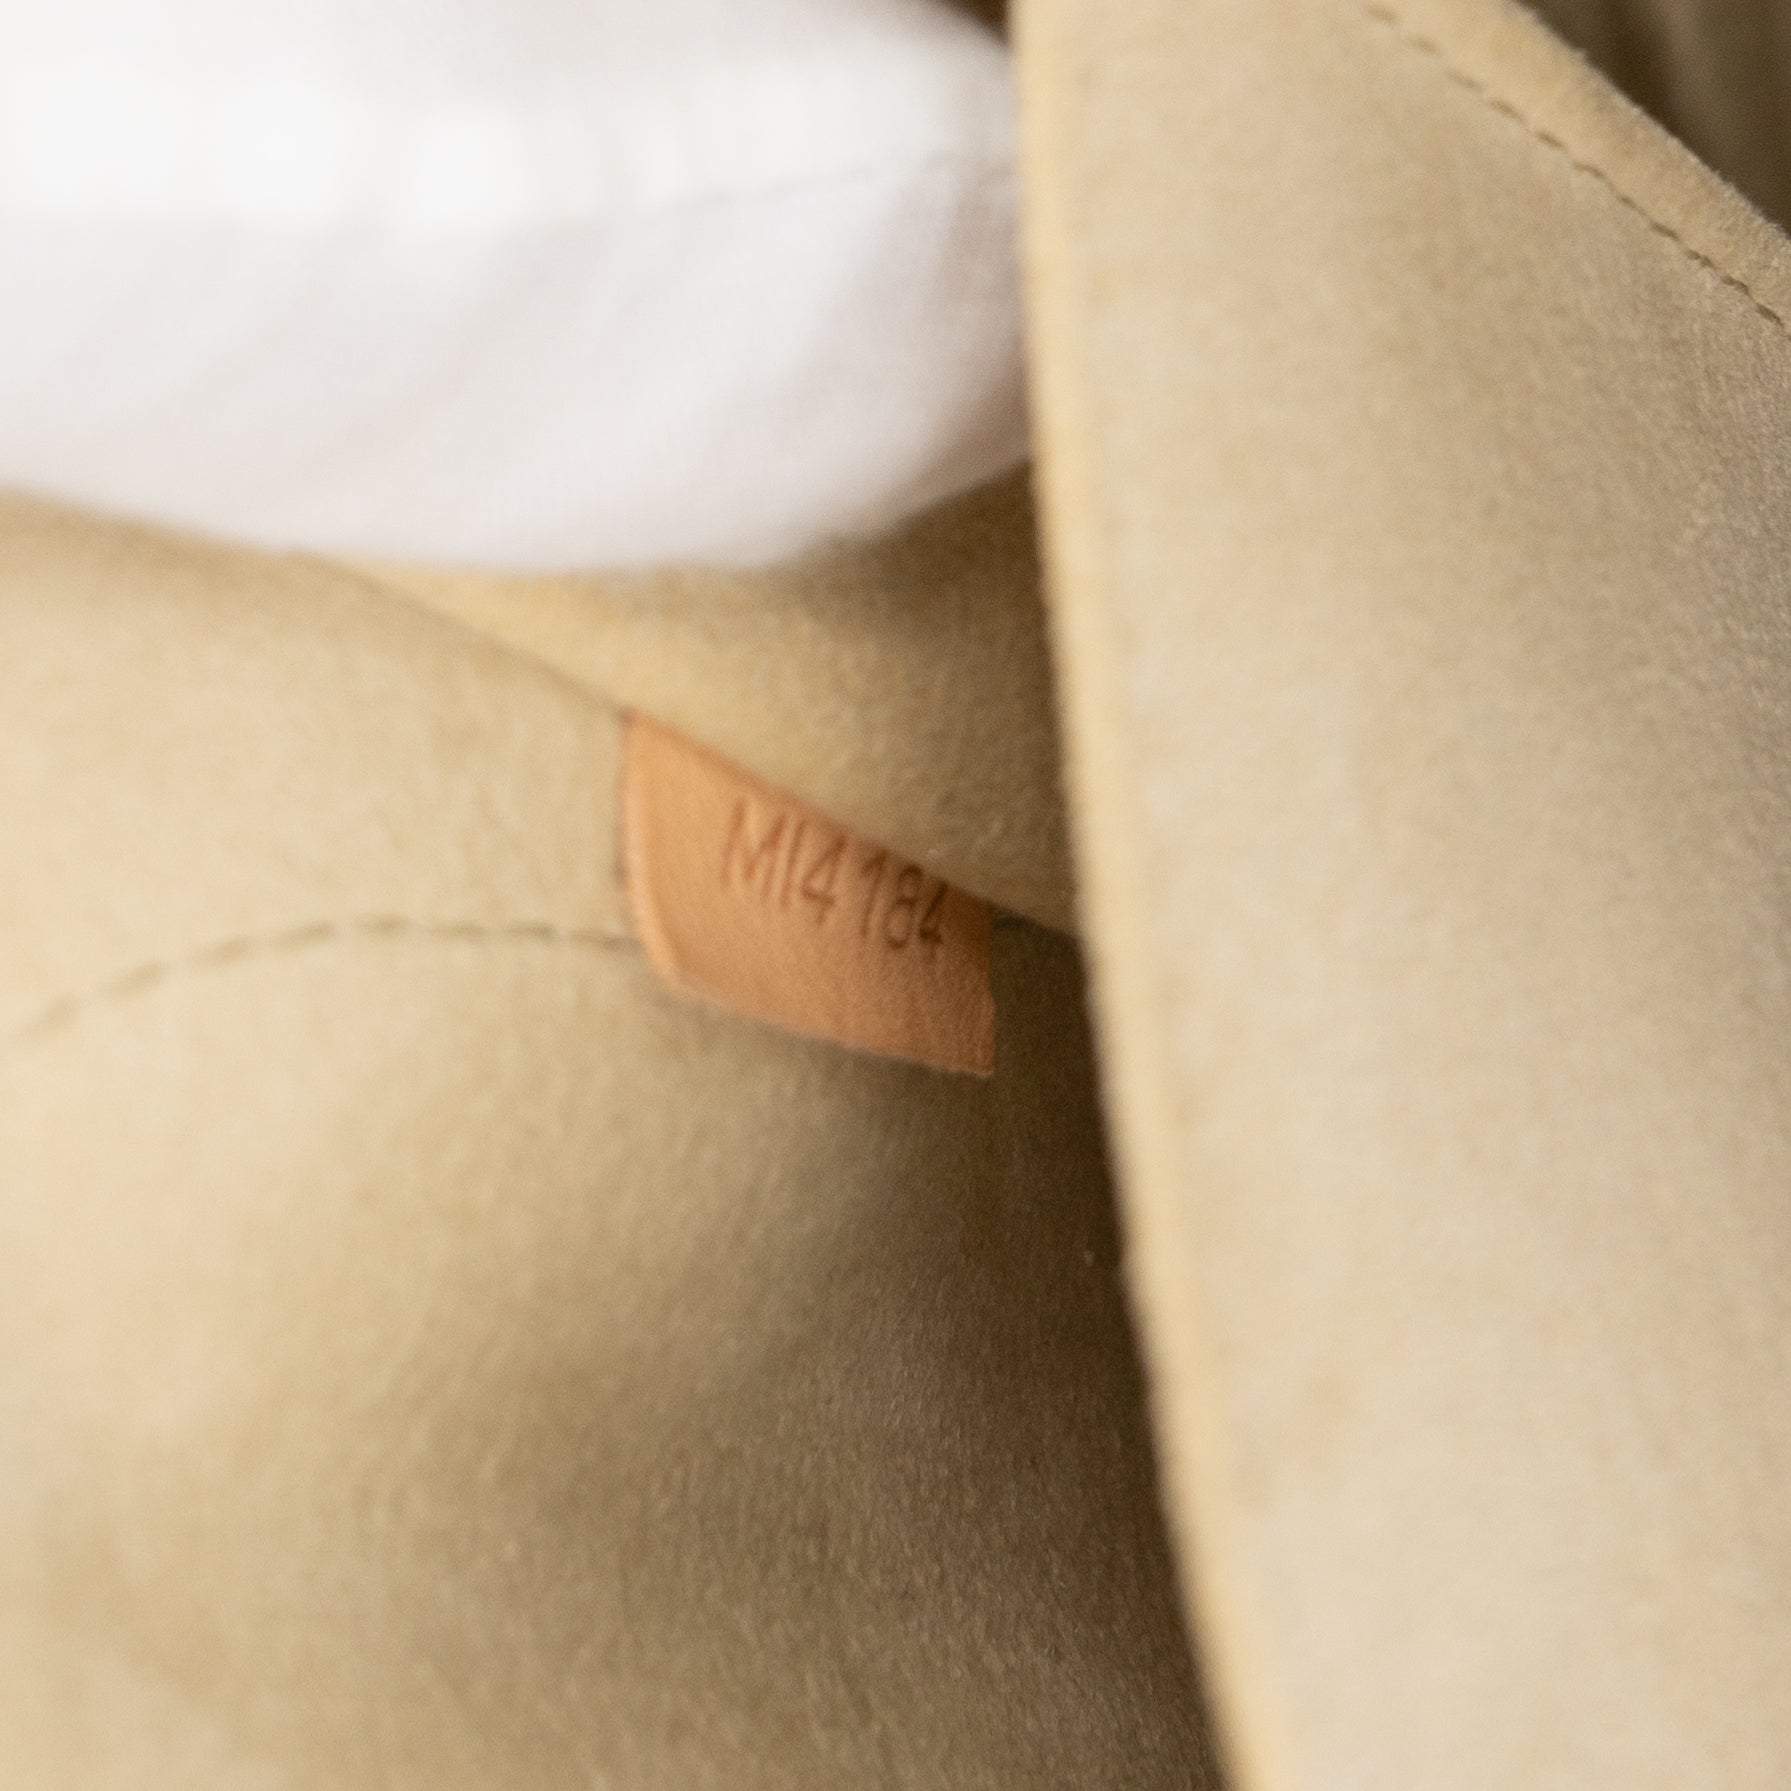 Louis Vuitton Cindy Sherman limited edition handbag – Sheer Room